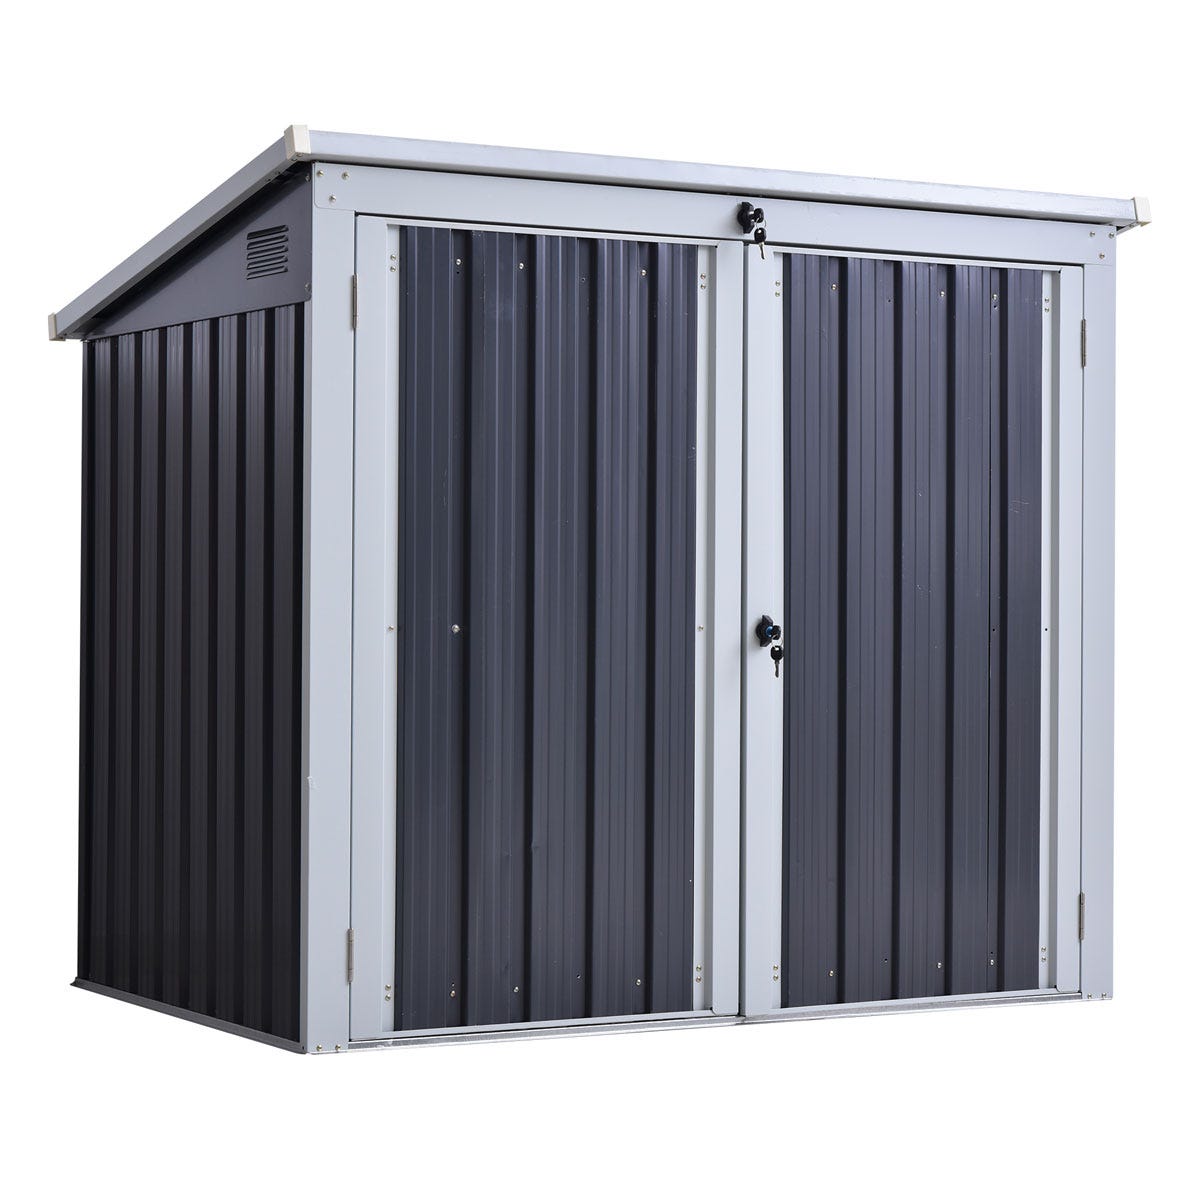 Outsunny 2-bin Corrugated Steel Rubbish Storage Shed W/ Locking Doors Lid Unit